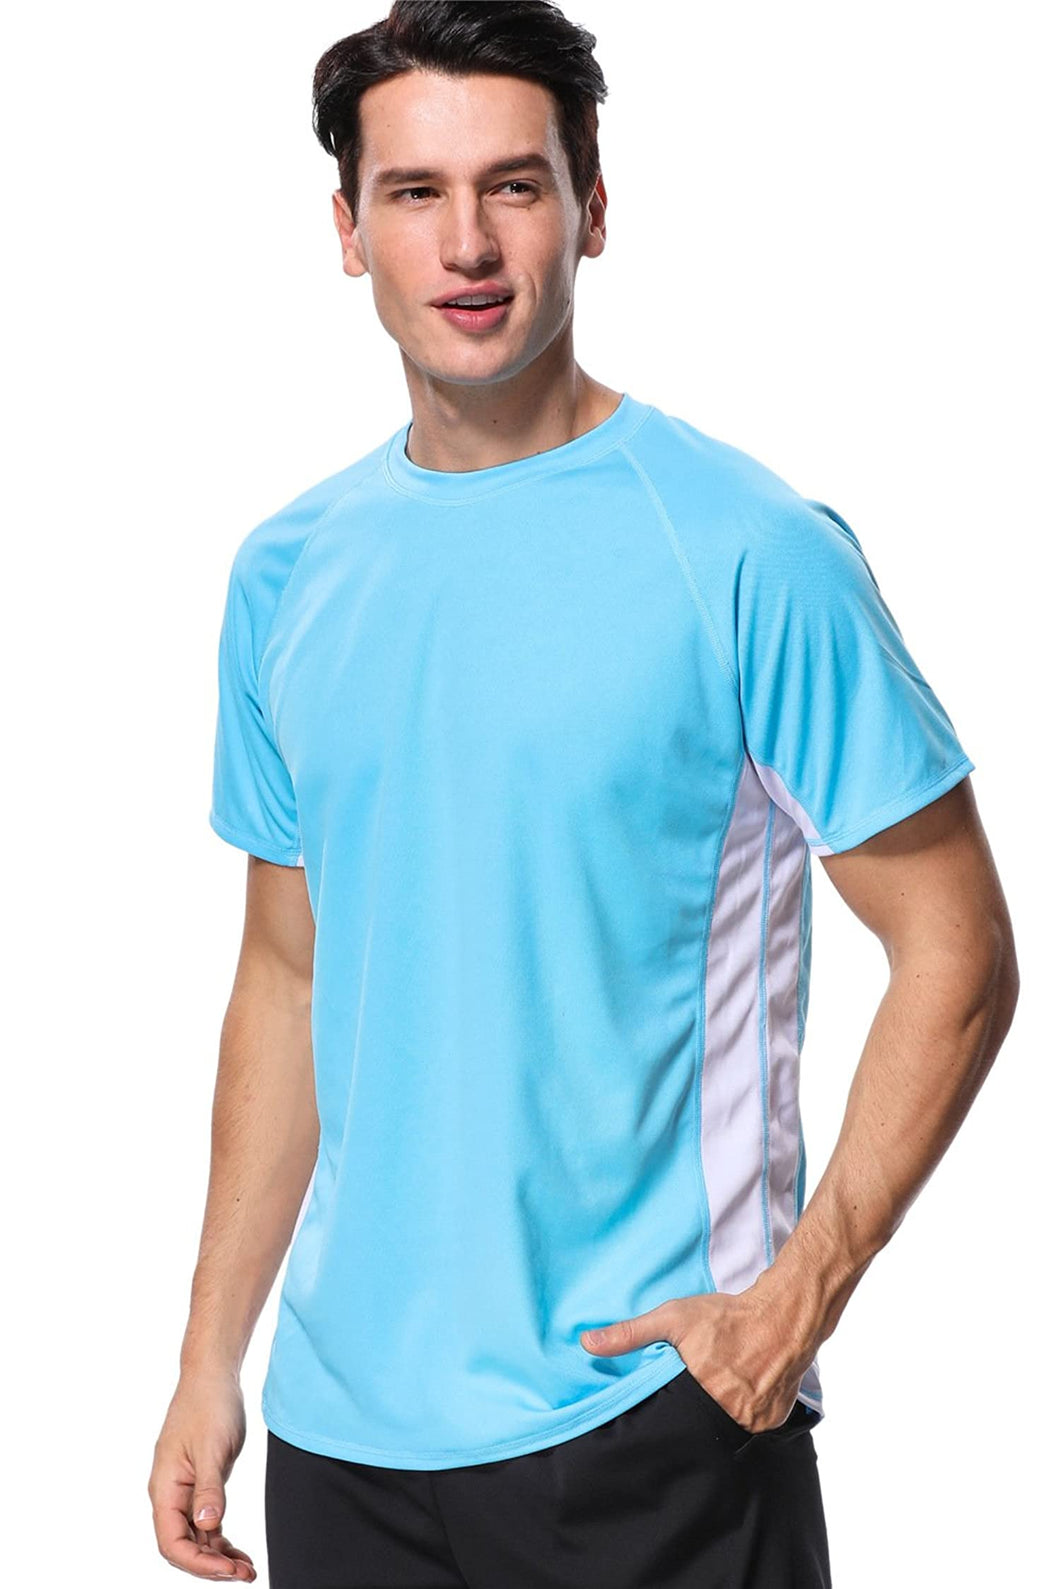 Men''s Rash Guard Short Sleeve Swim Shirts Sportwear Loose Fit Upf 50